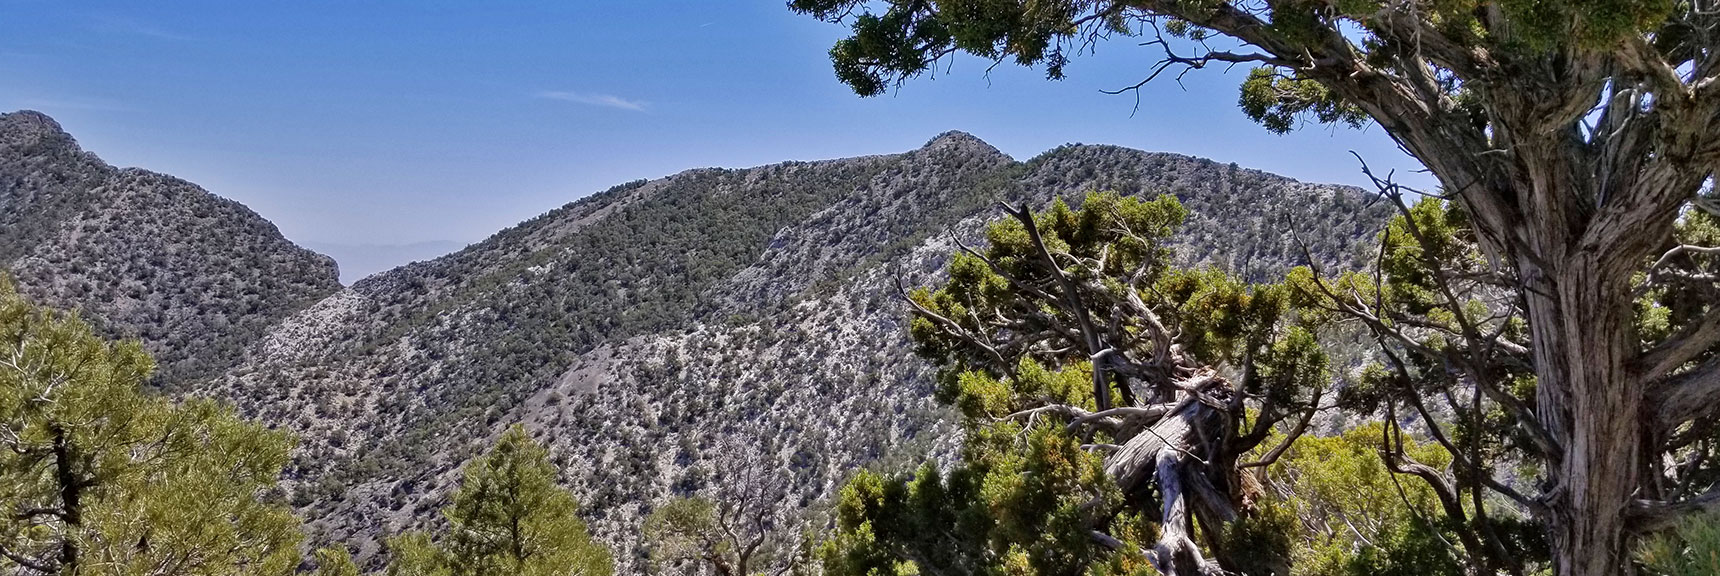 Northwestern View of El Padre Mountain, La Madre Mountains Wilderness, Nevada